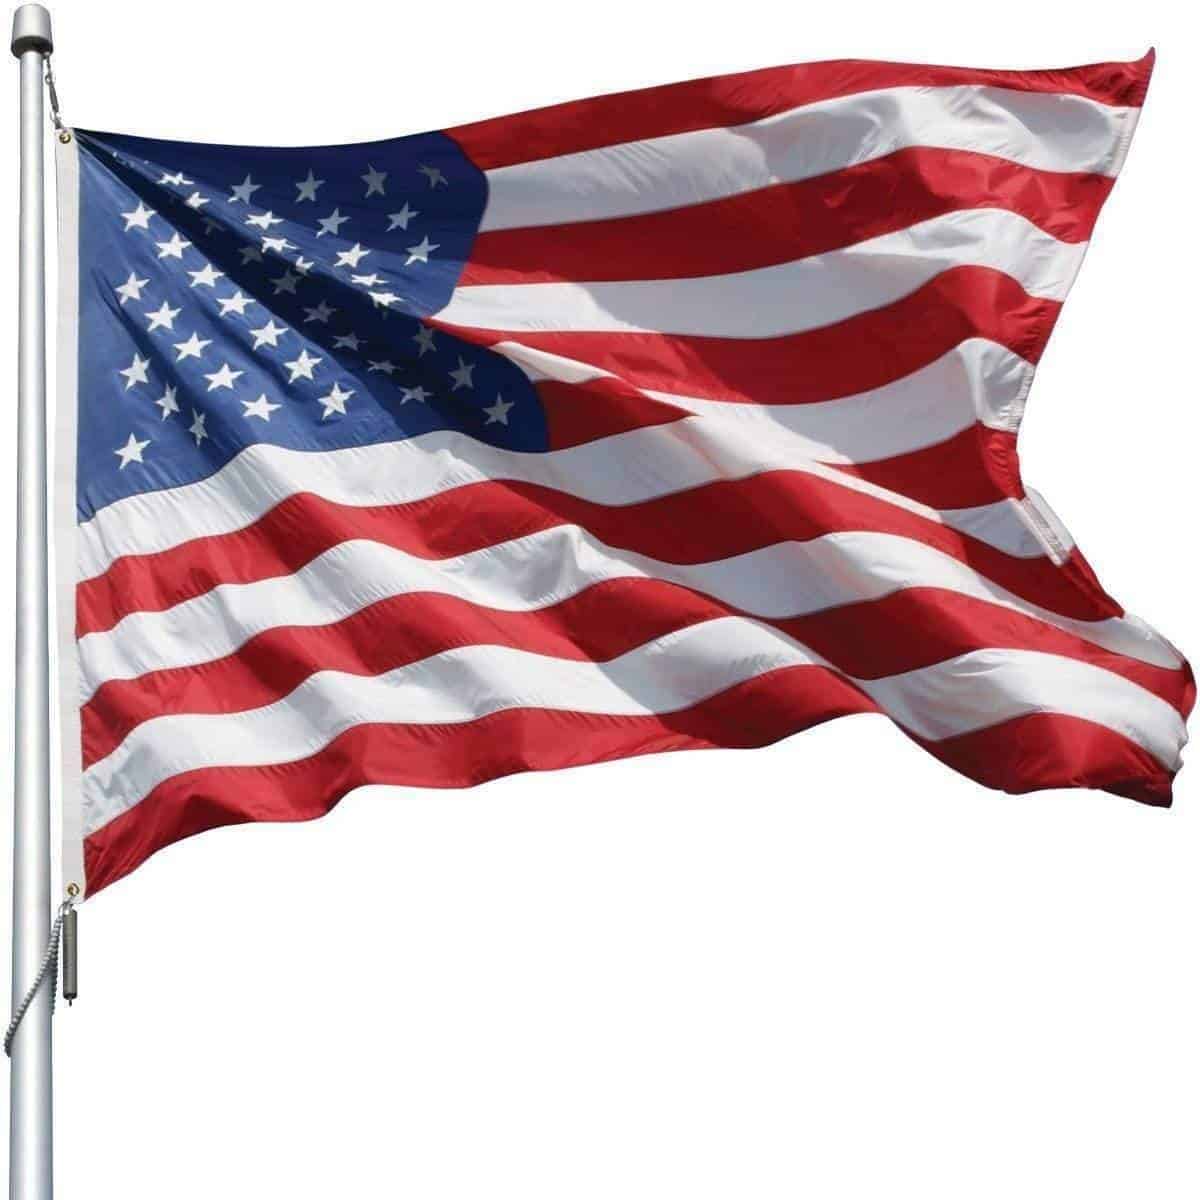 US Flag Titan SolarMax Nylon Embroidered Stars Sewn Stripes Made in USA 